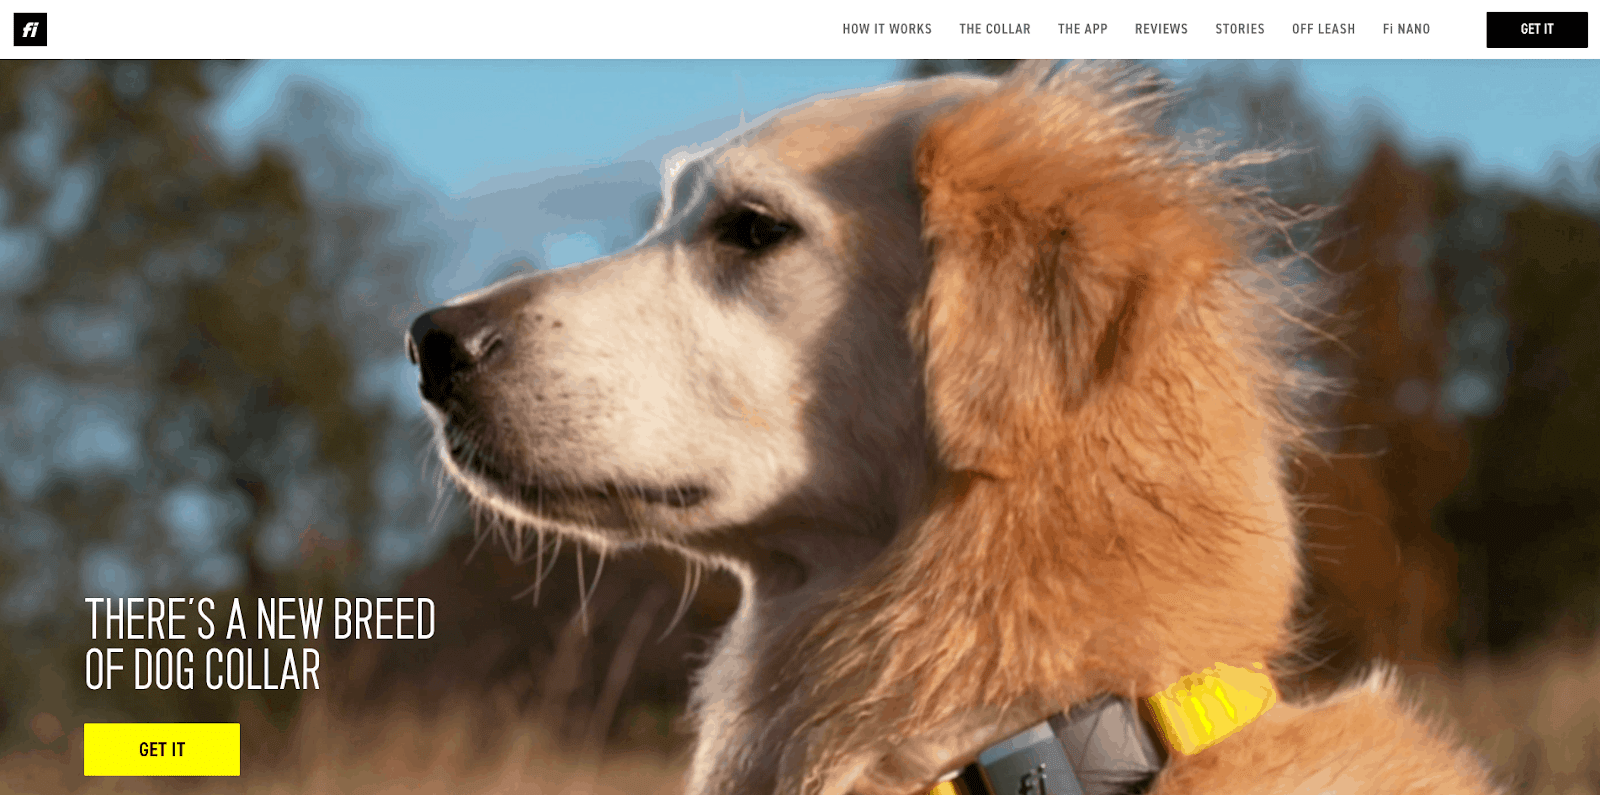 Fi Dog Collar home page